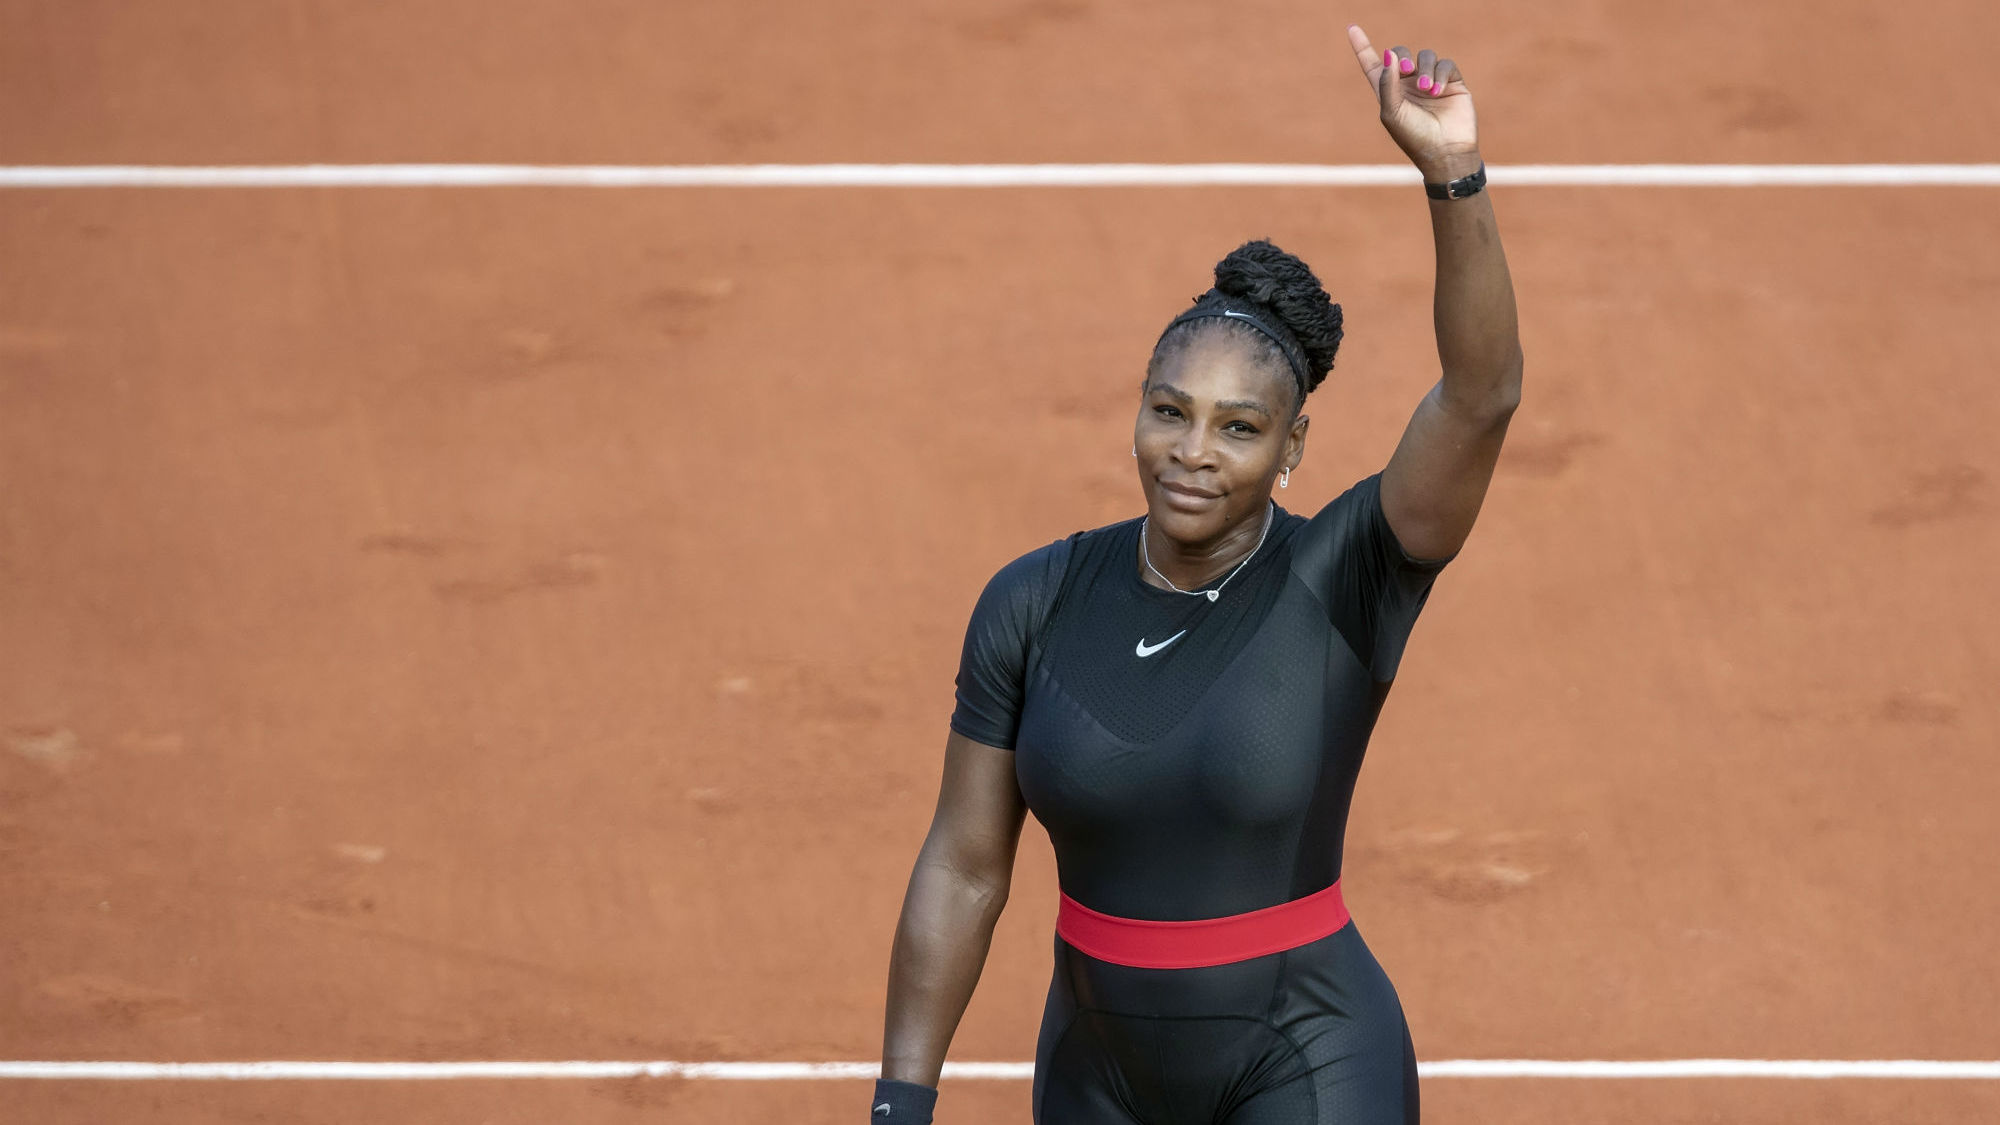 voldoende bevestig alstublieft hier Nike Responds to Serena Williams Catsuit Ban | Sole Collector